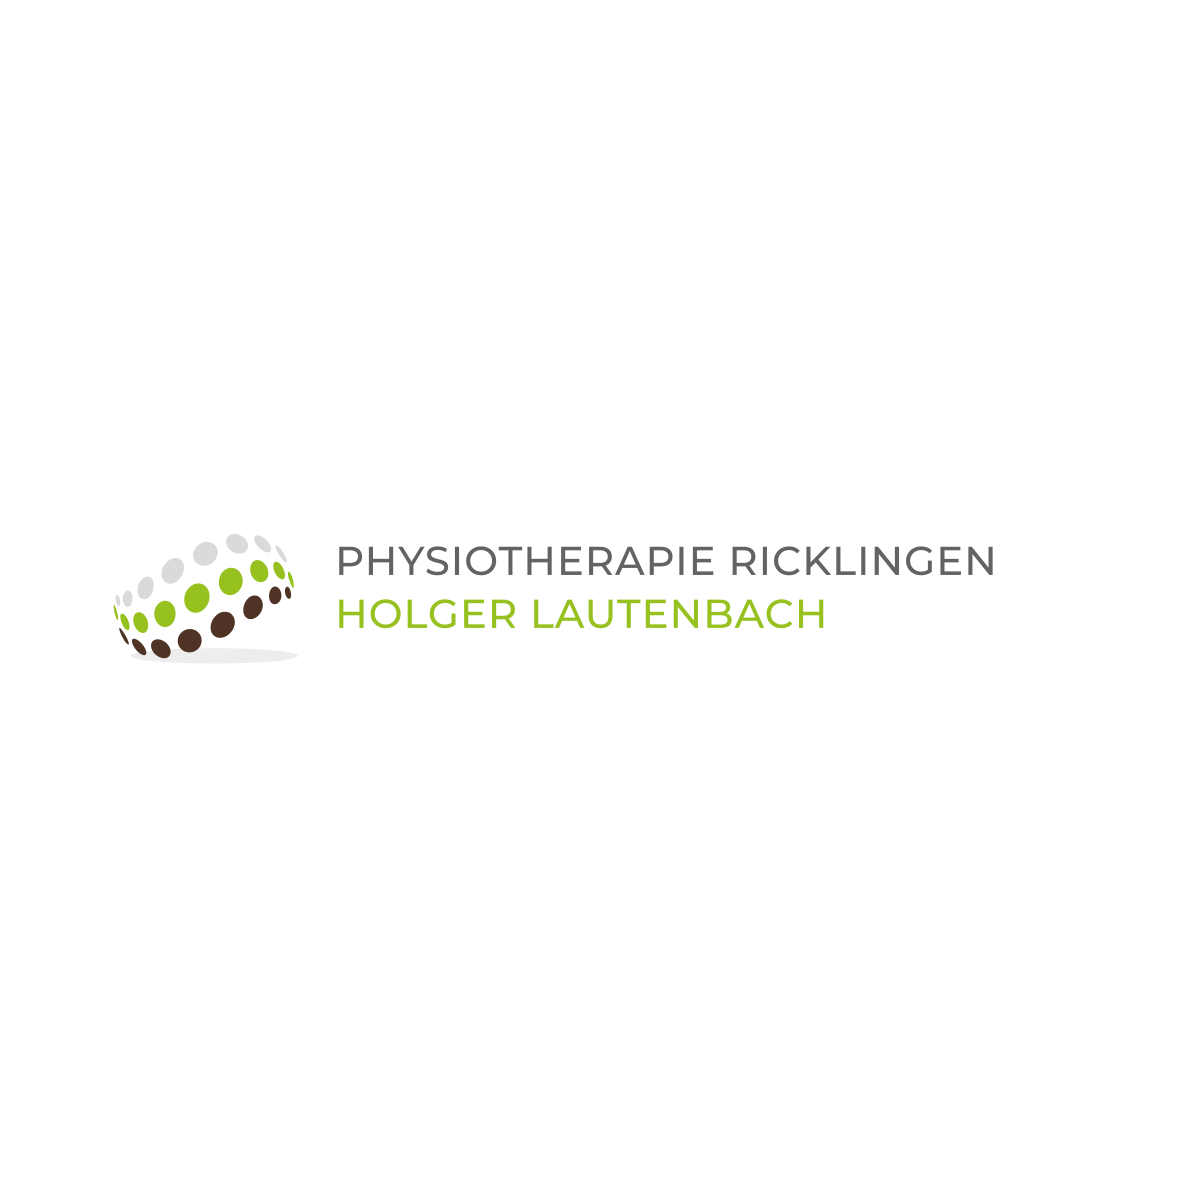 Physiotherapie Ricklingen Holger Lautenbach